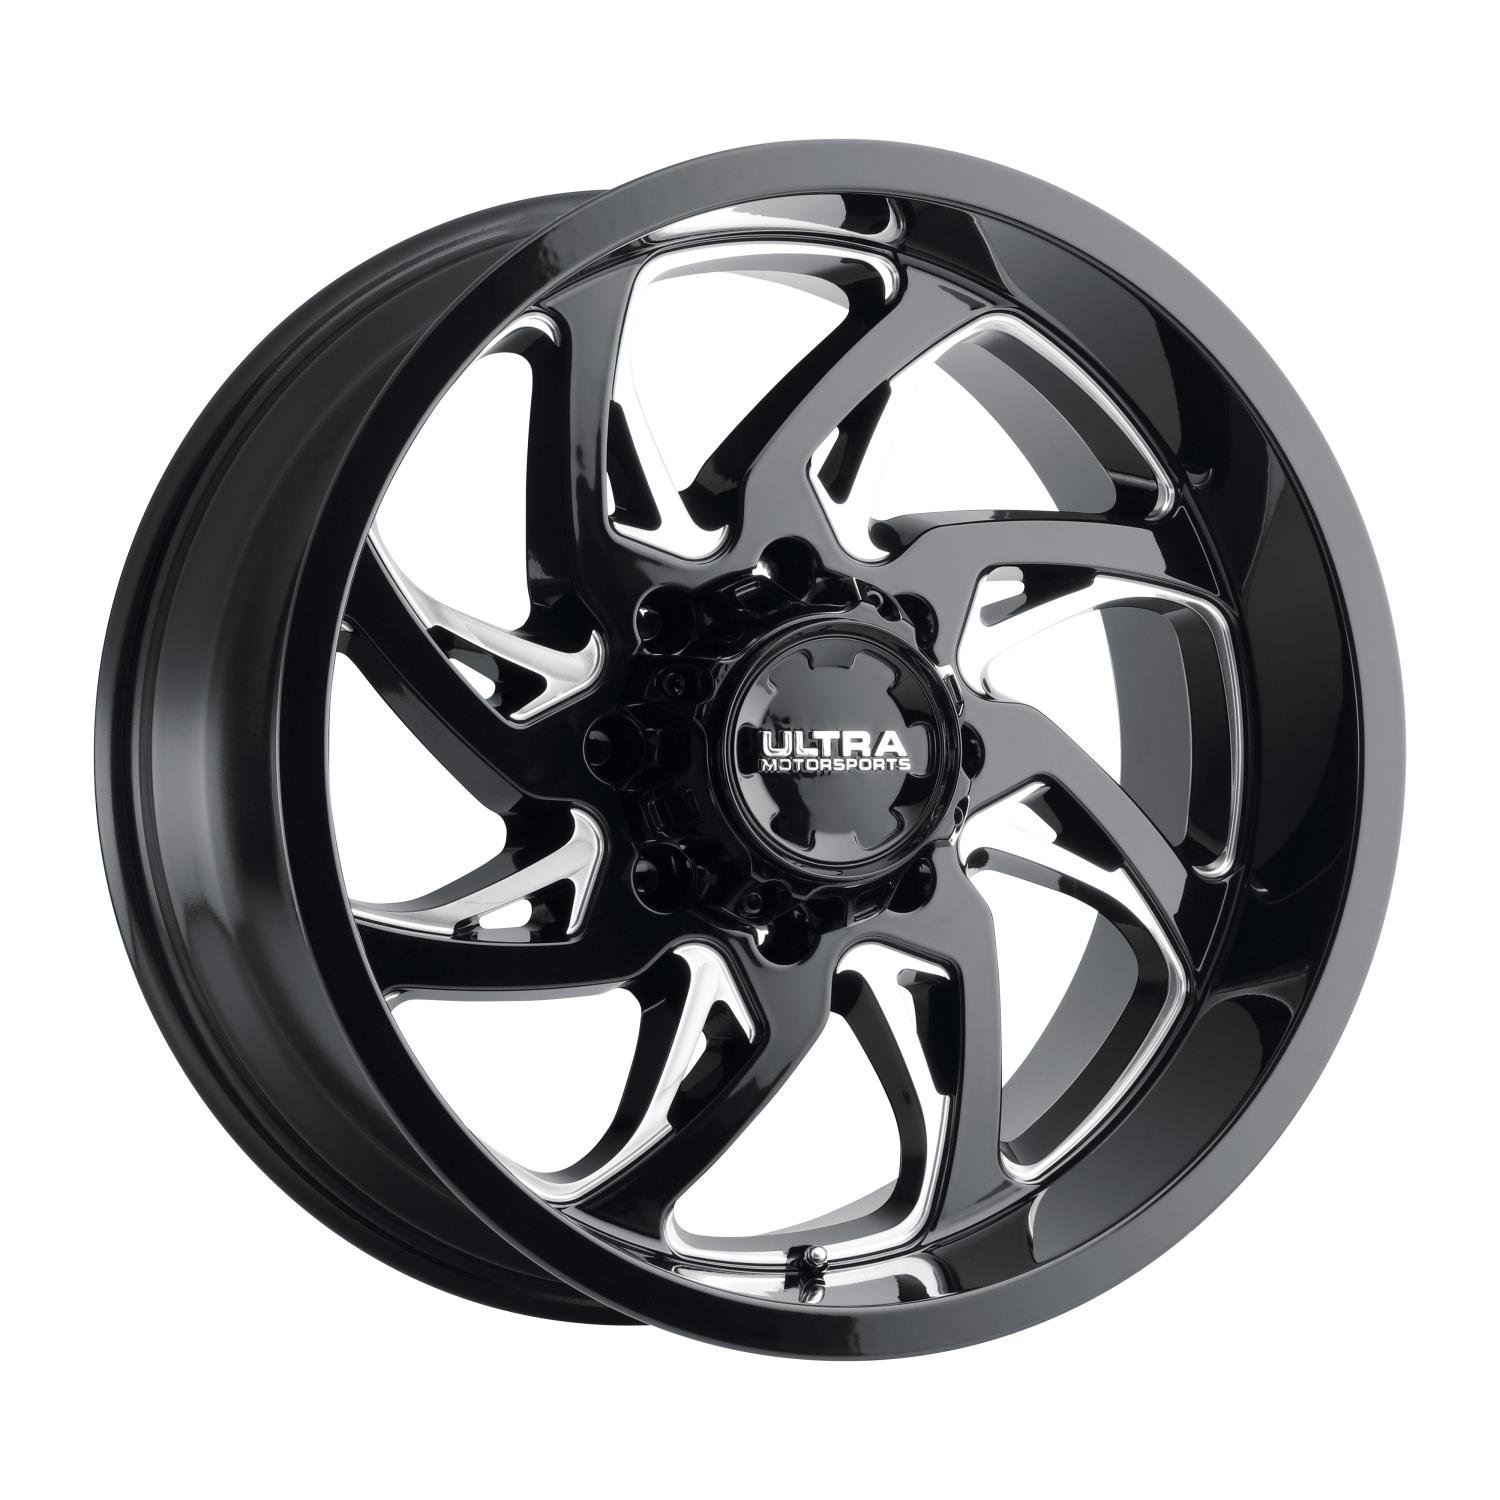 230-Series Villain Wheel, Size: 20x9", Bolt Pattern: 8x170 mm [Gloss Black w/Milled Accents]